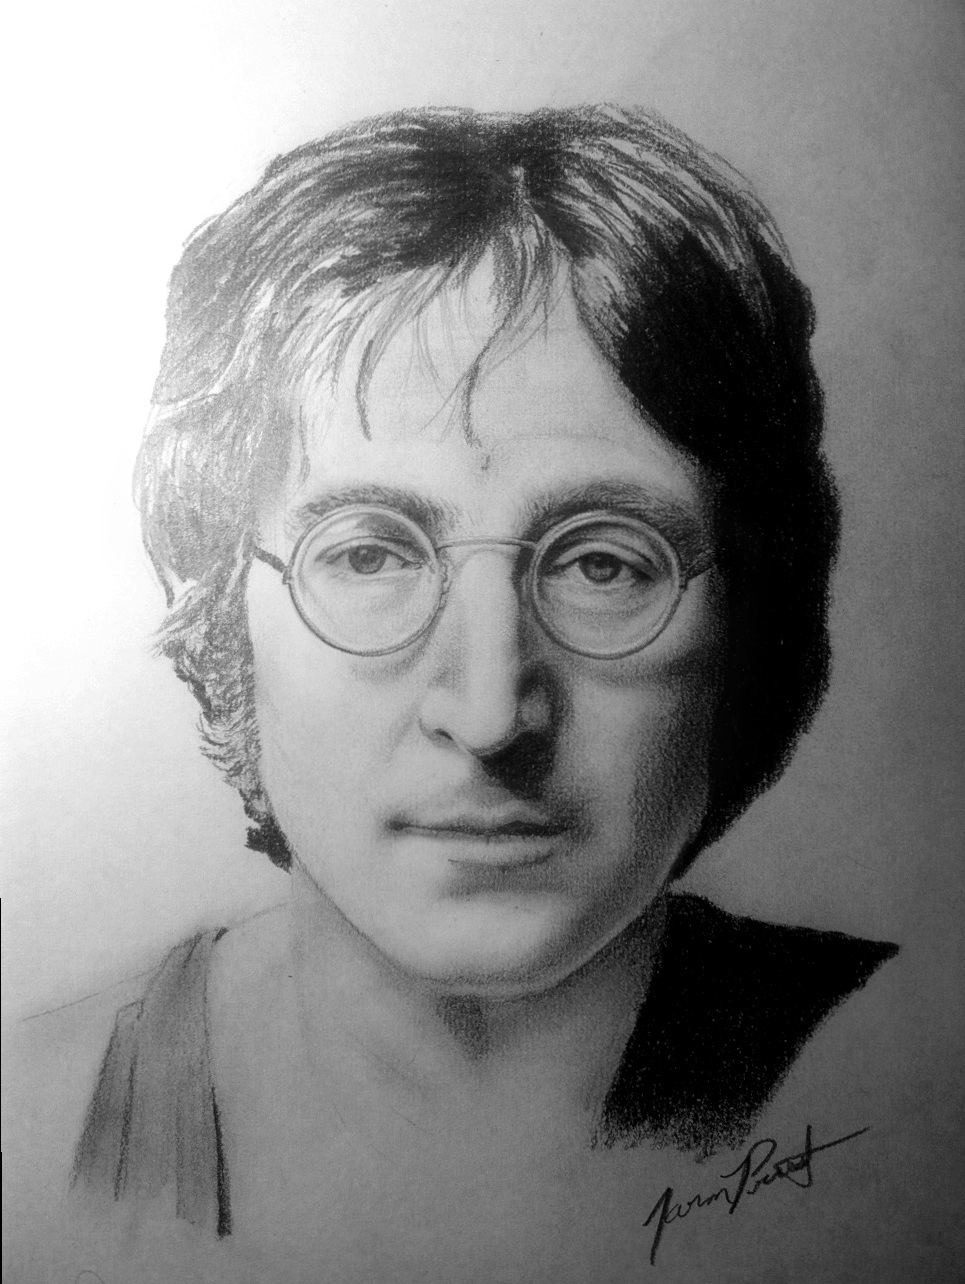 John Lennon Artist: Jaron Priest